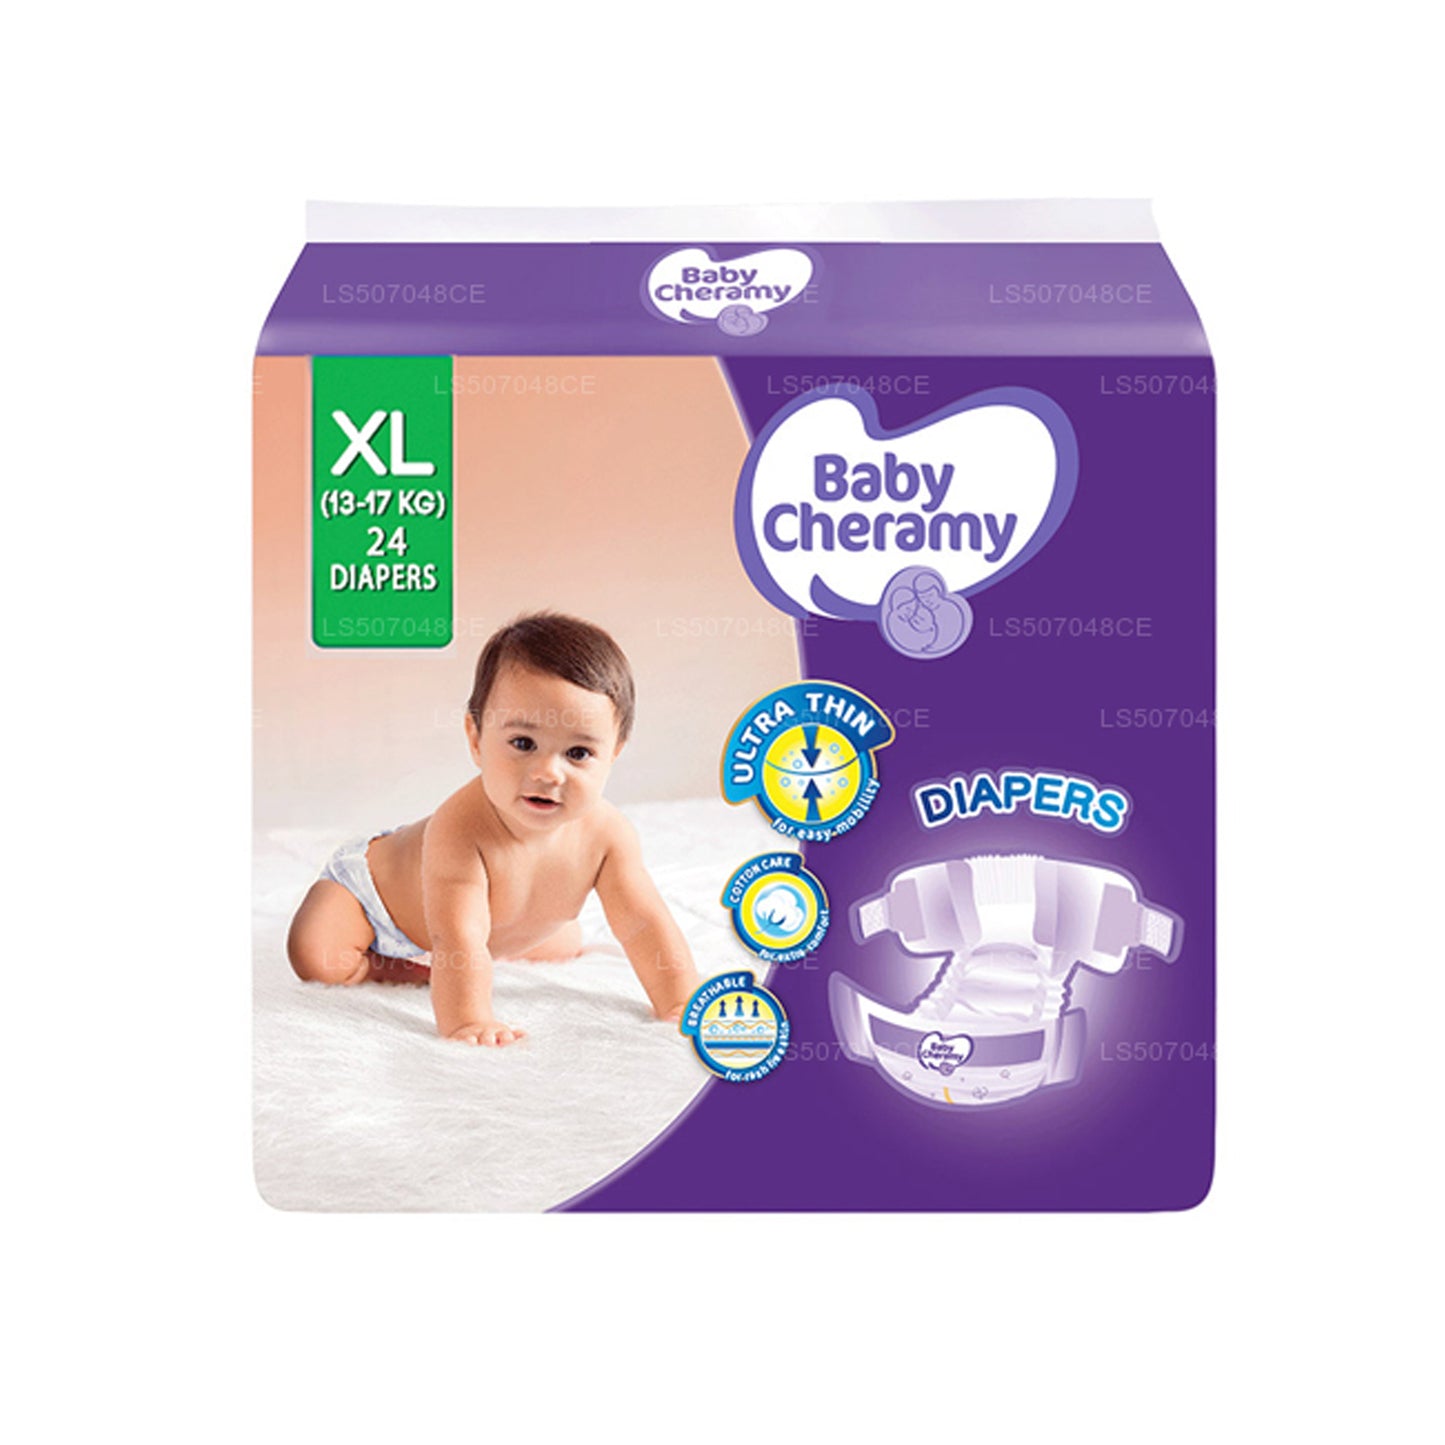 Baby Cheramy Diapers XL (24 Diapers)